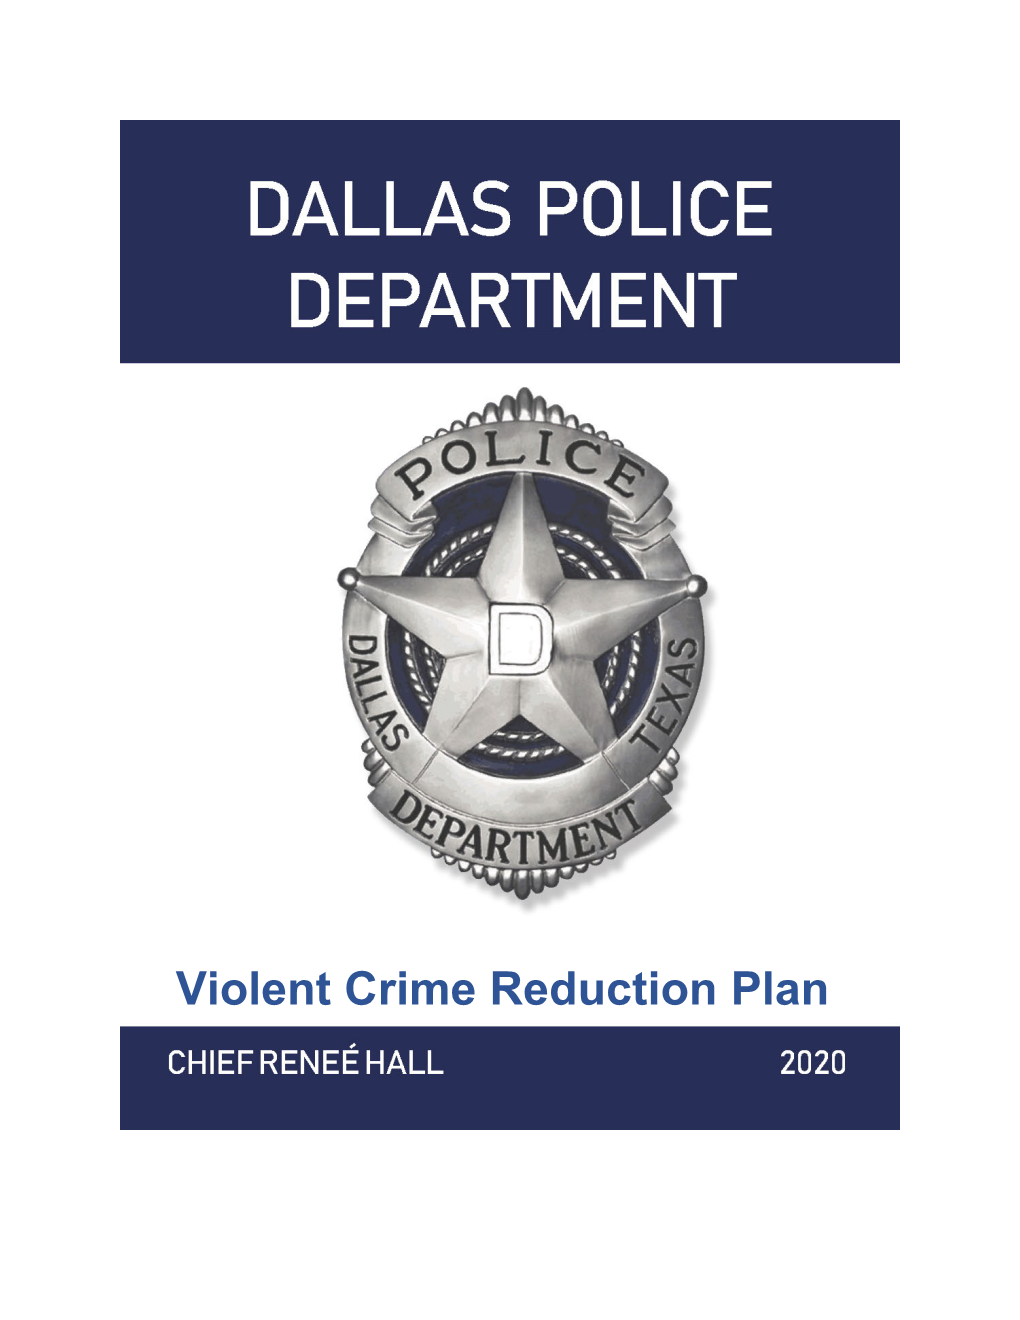 Dallas Police Department 2020 Violent Crime Reduction Plan